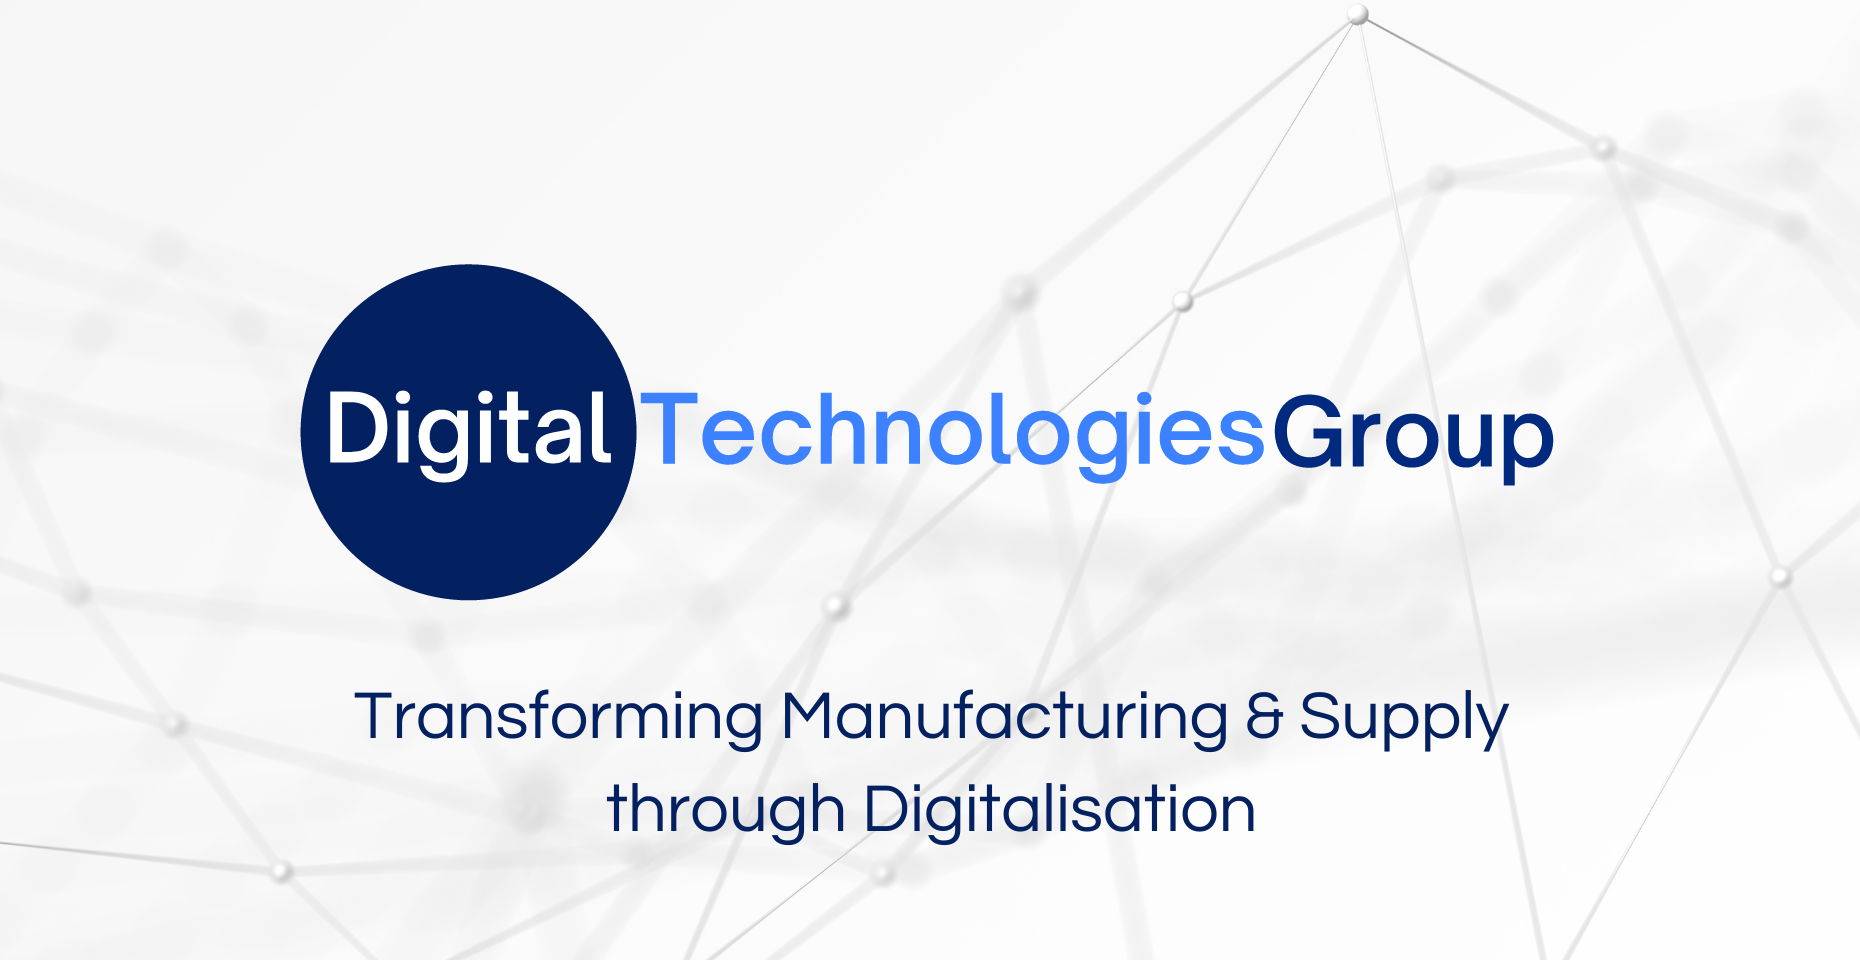 Digital Technologies Group